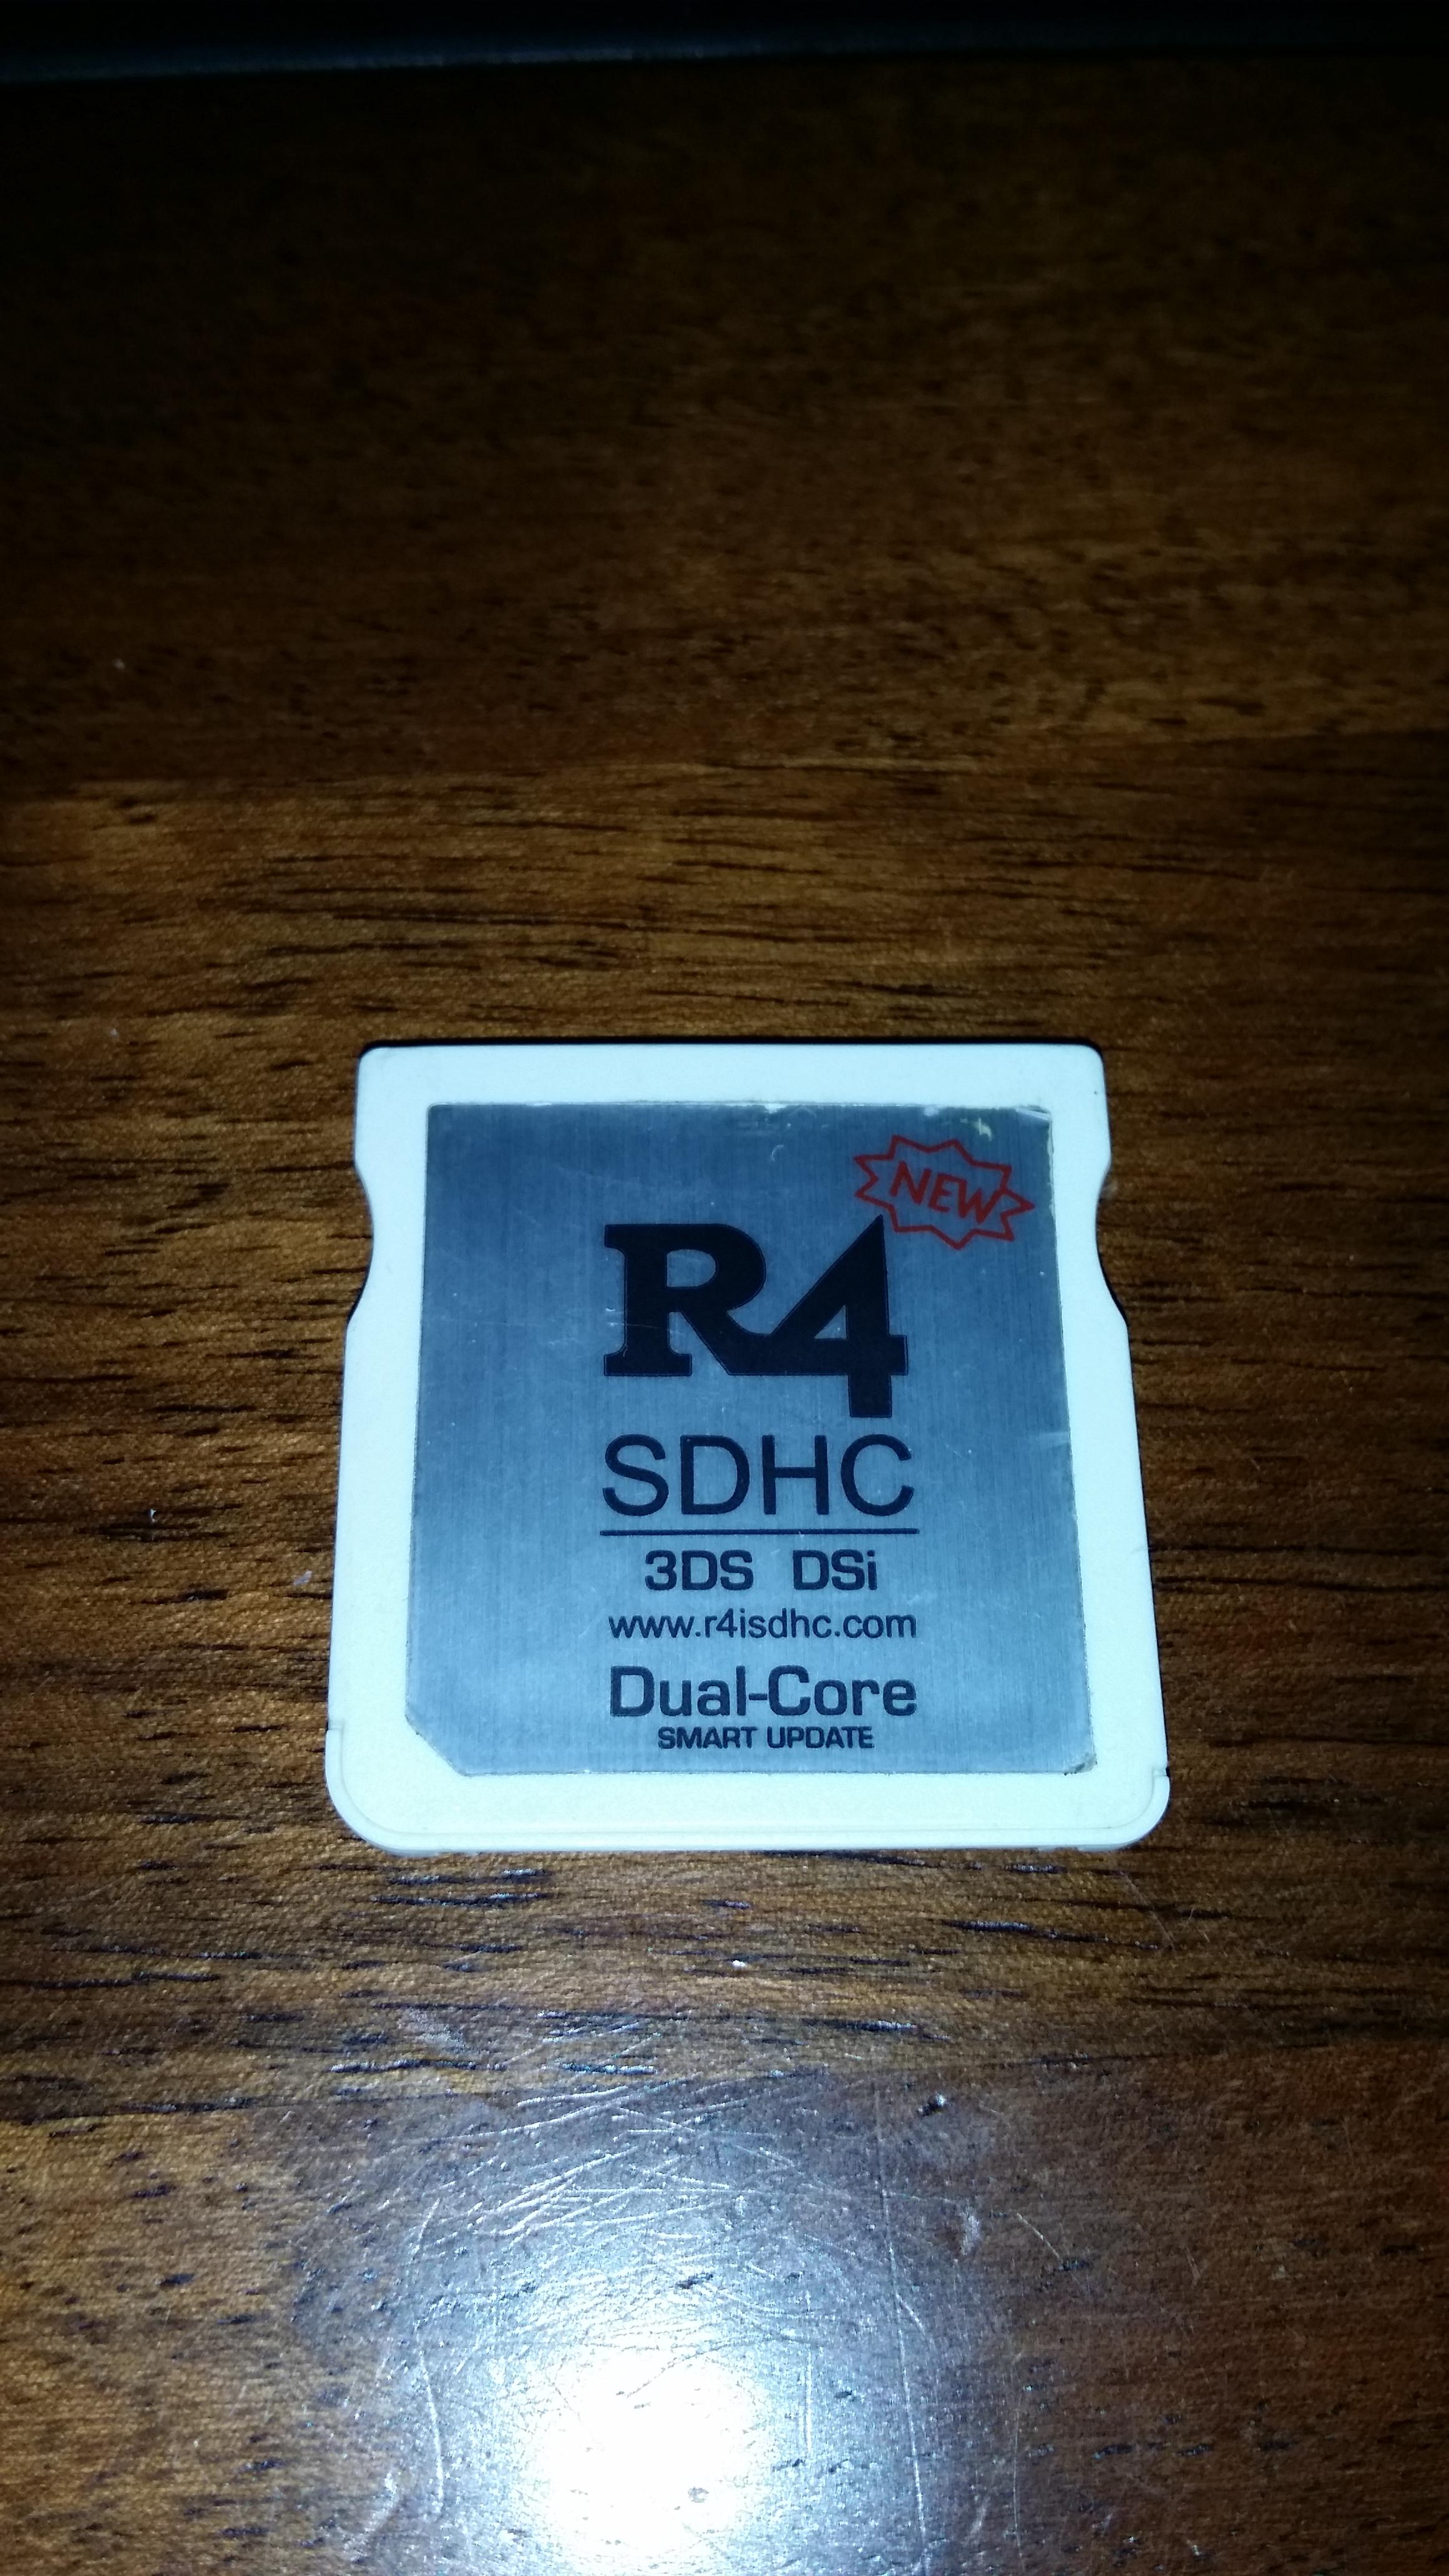 R4 Sdhc 3ds Dsi Dual Core Smart Update Kernel 3ds